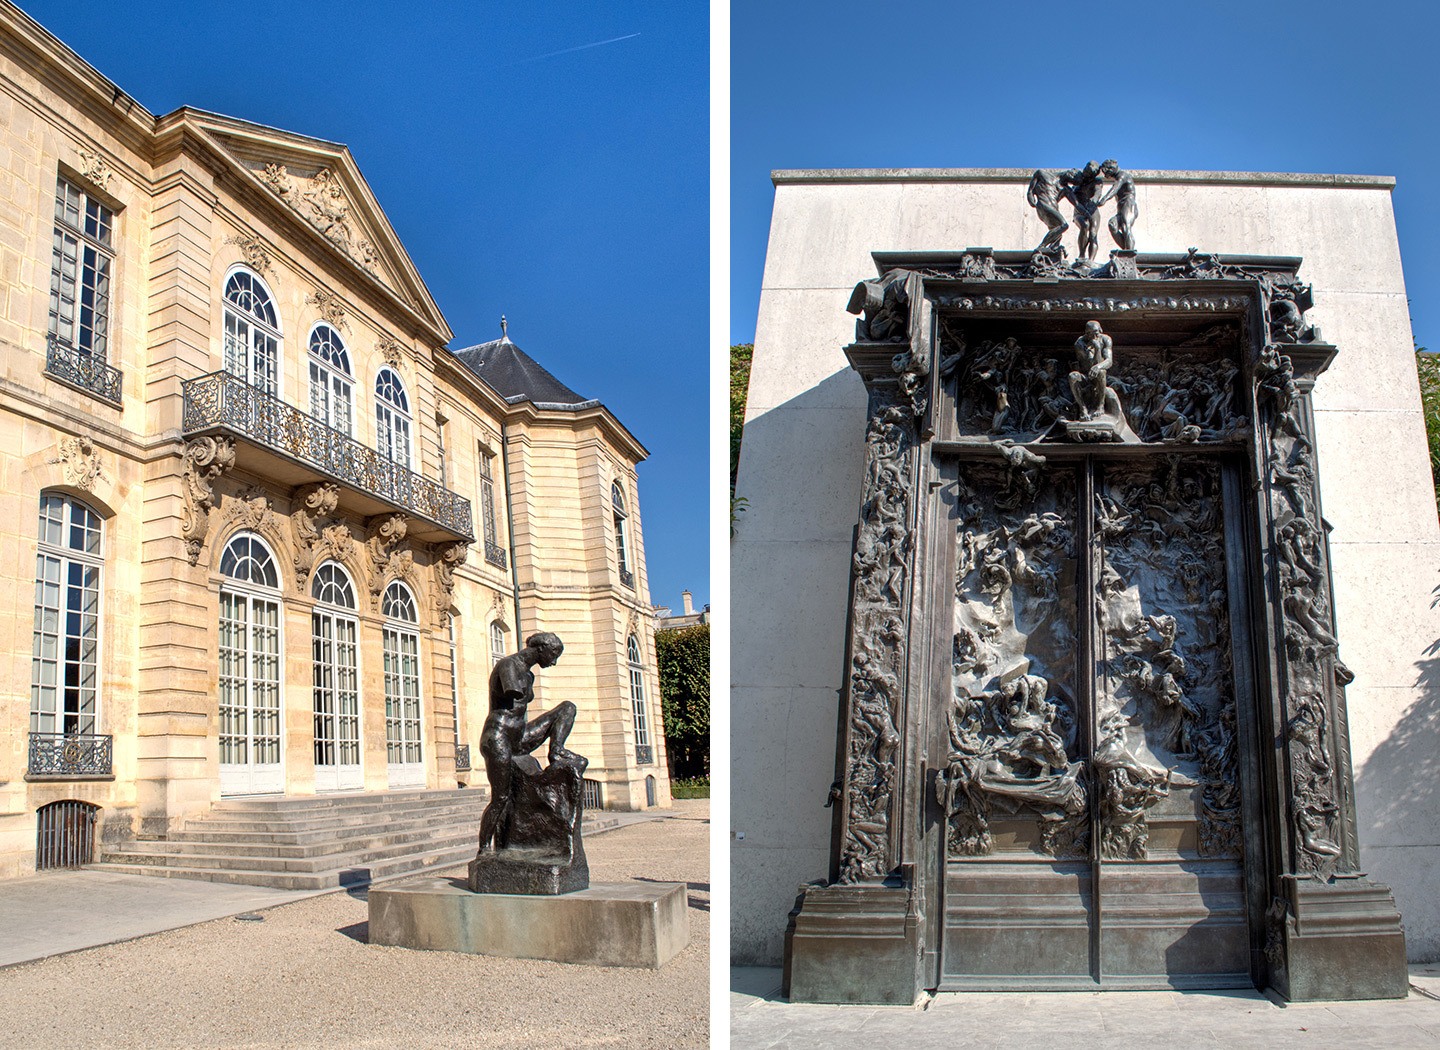 The Rodin Museum sculpture garden in Paris